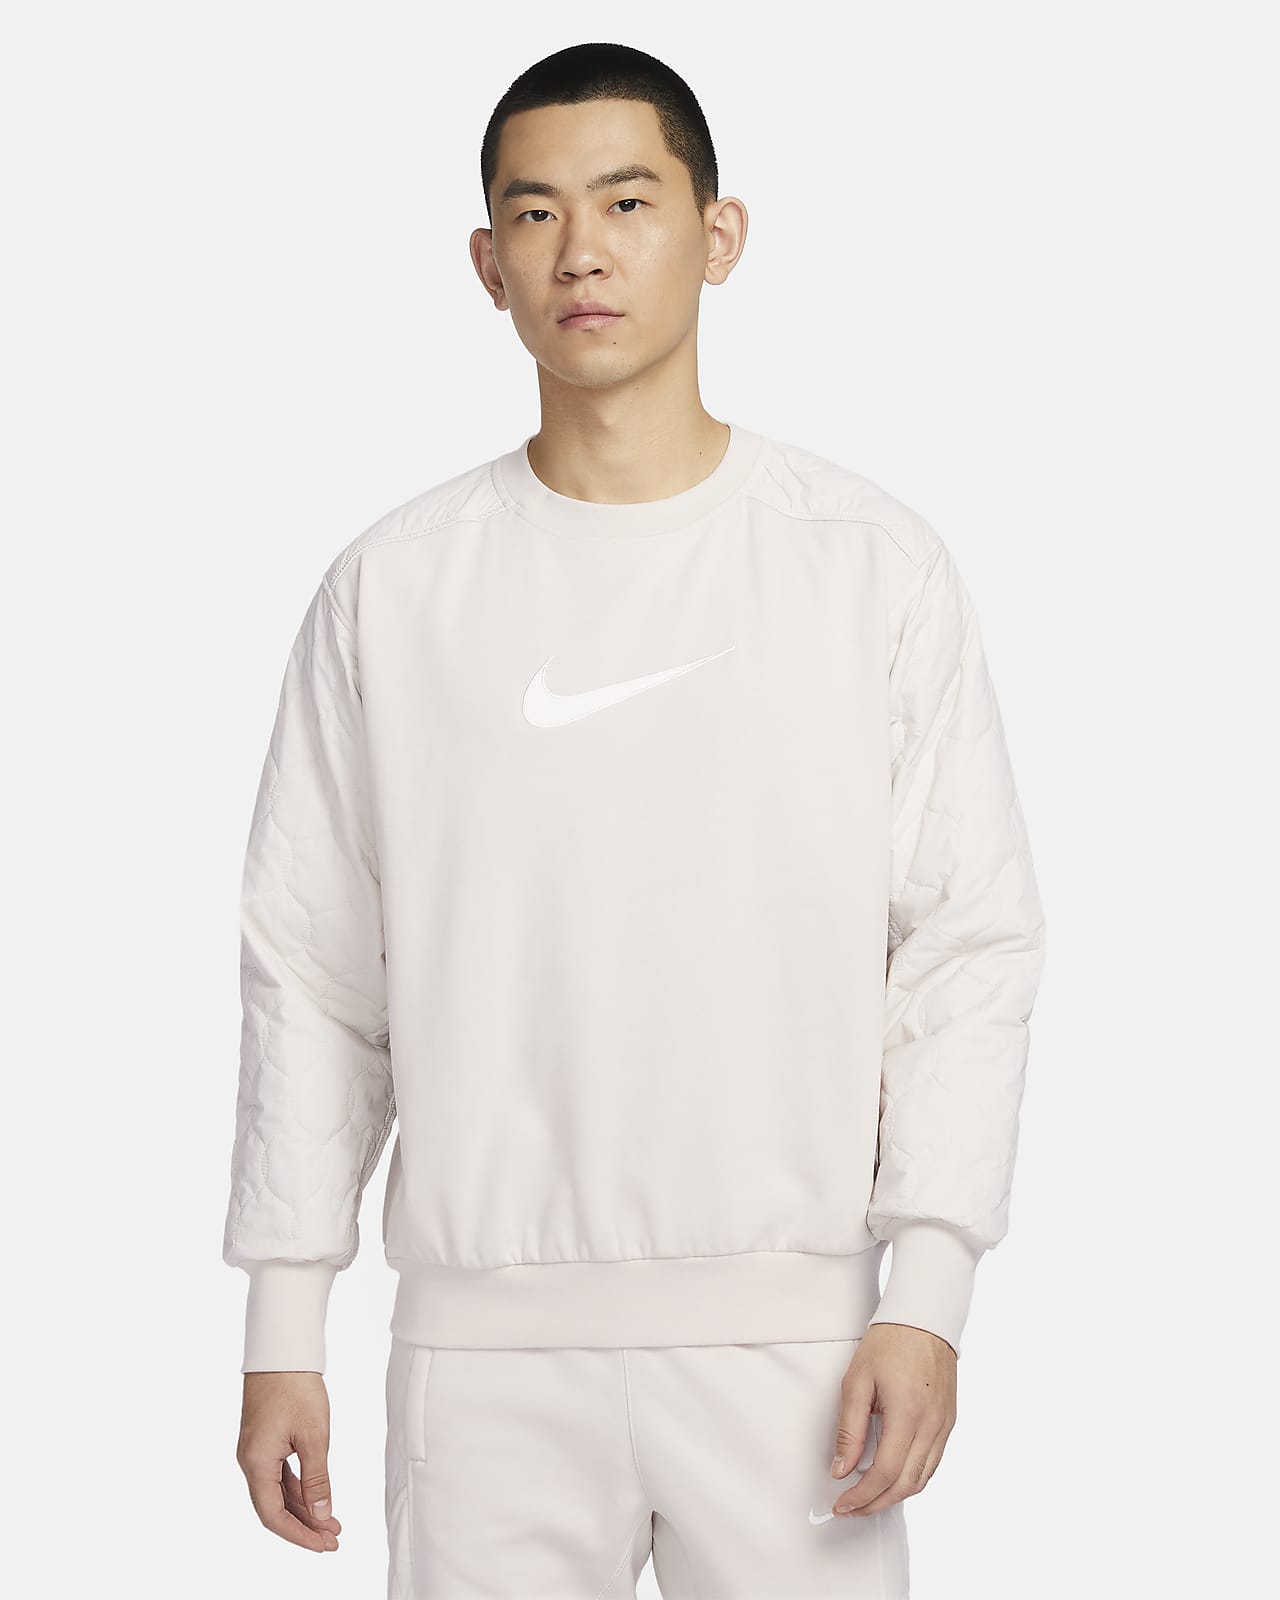 Nike Standard Issue 男子速干加绒拼接篮球圆领运动衫